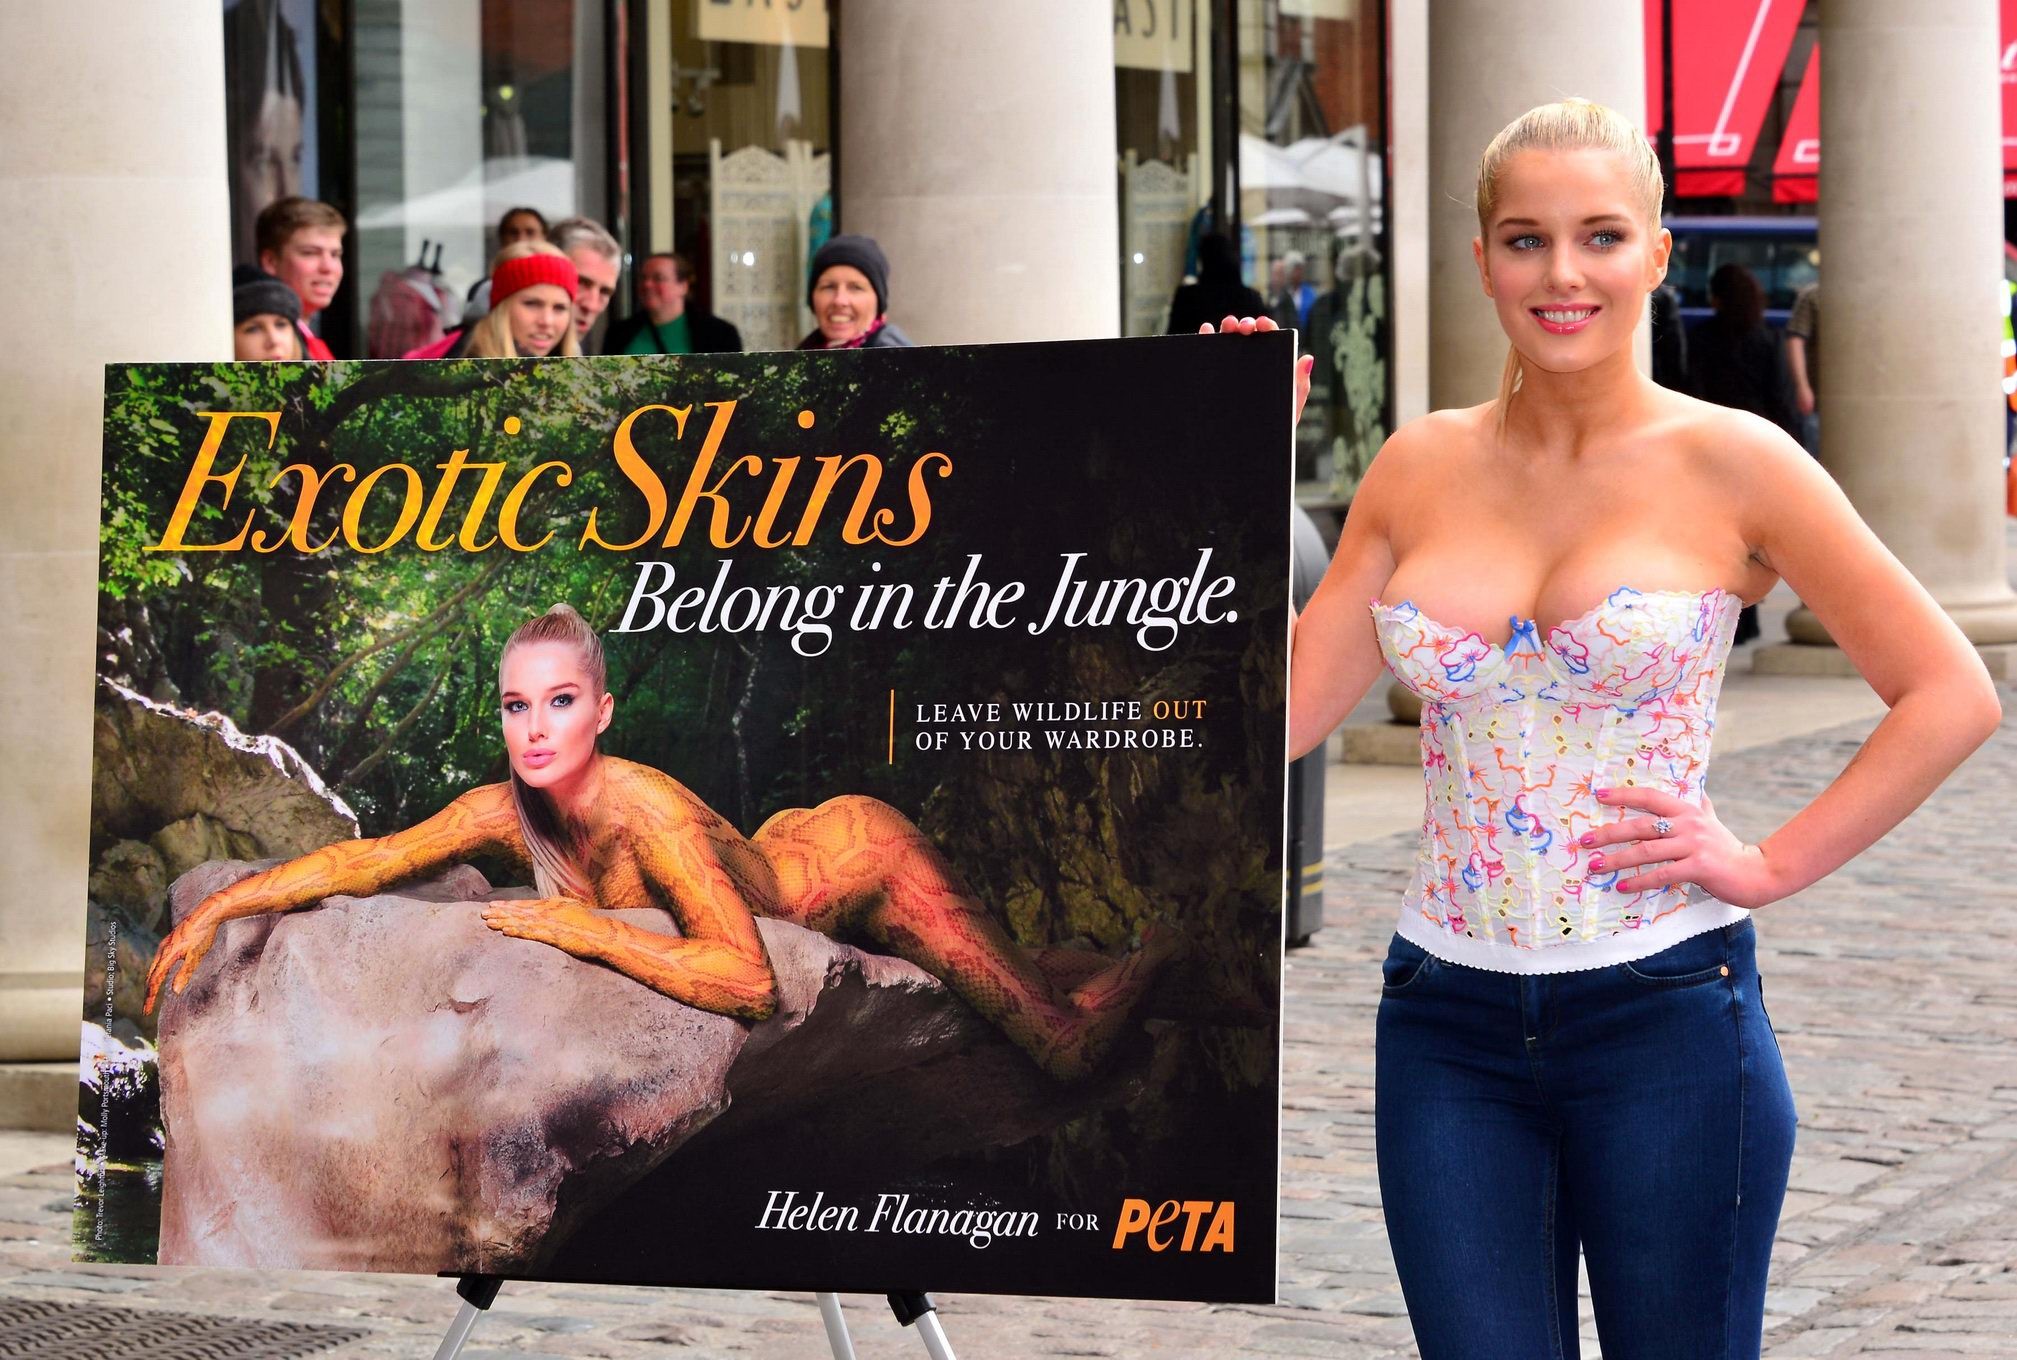 Busty Helen Flanagan in corset revealing her body paint PETA ad in Covent Garden #75223366